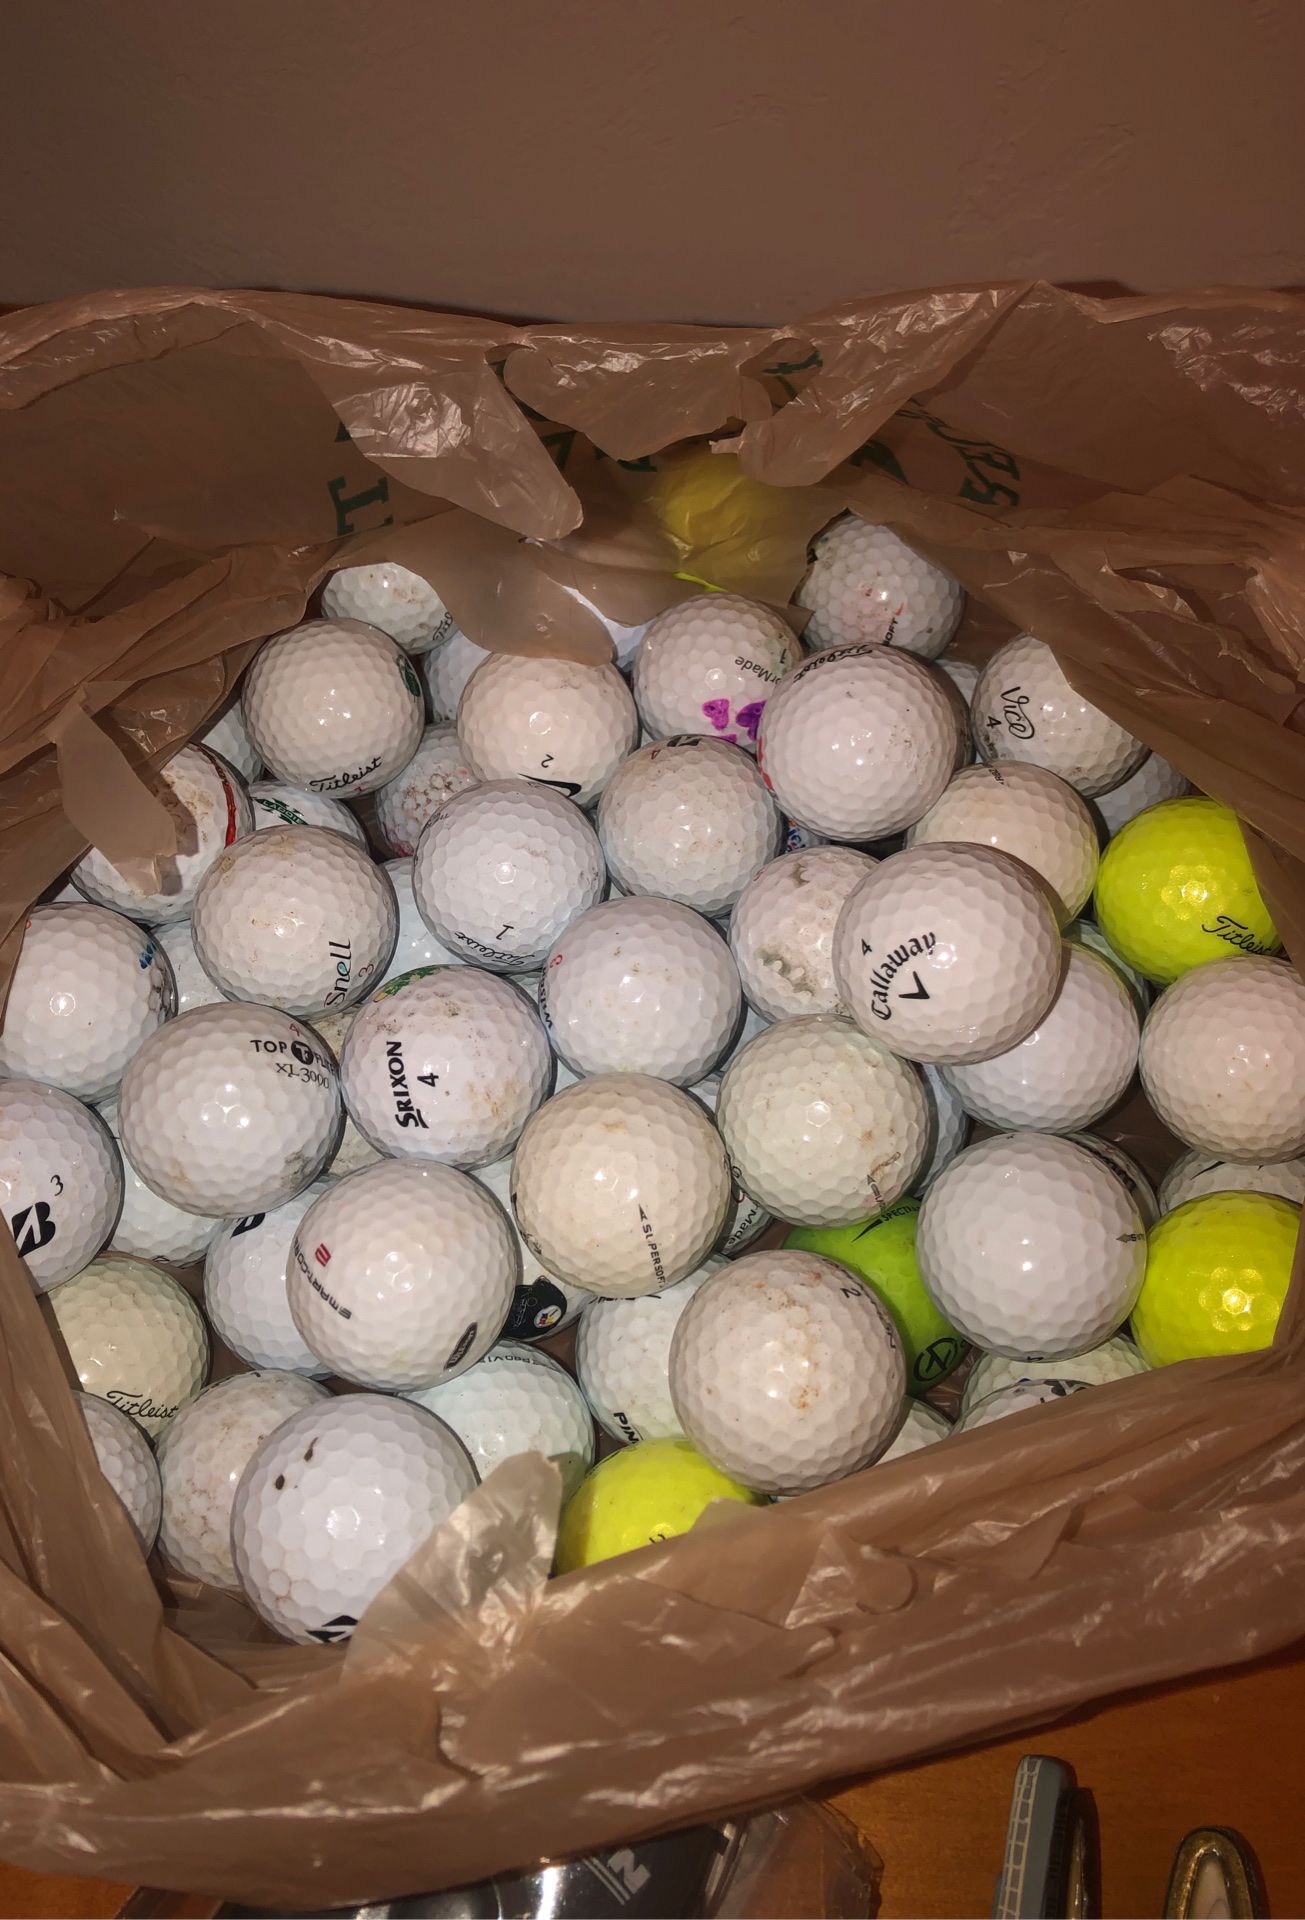 Free golf balls